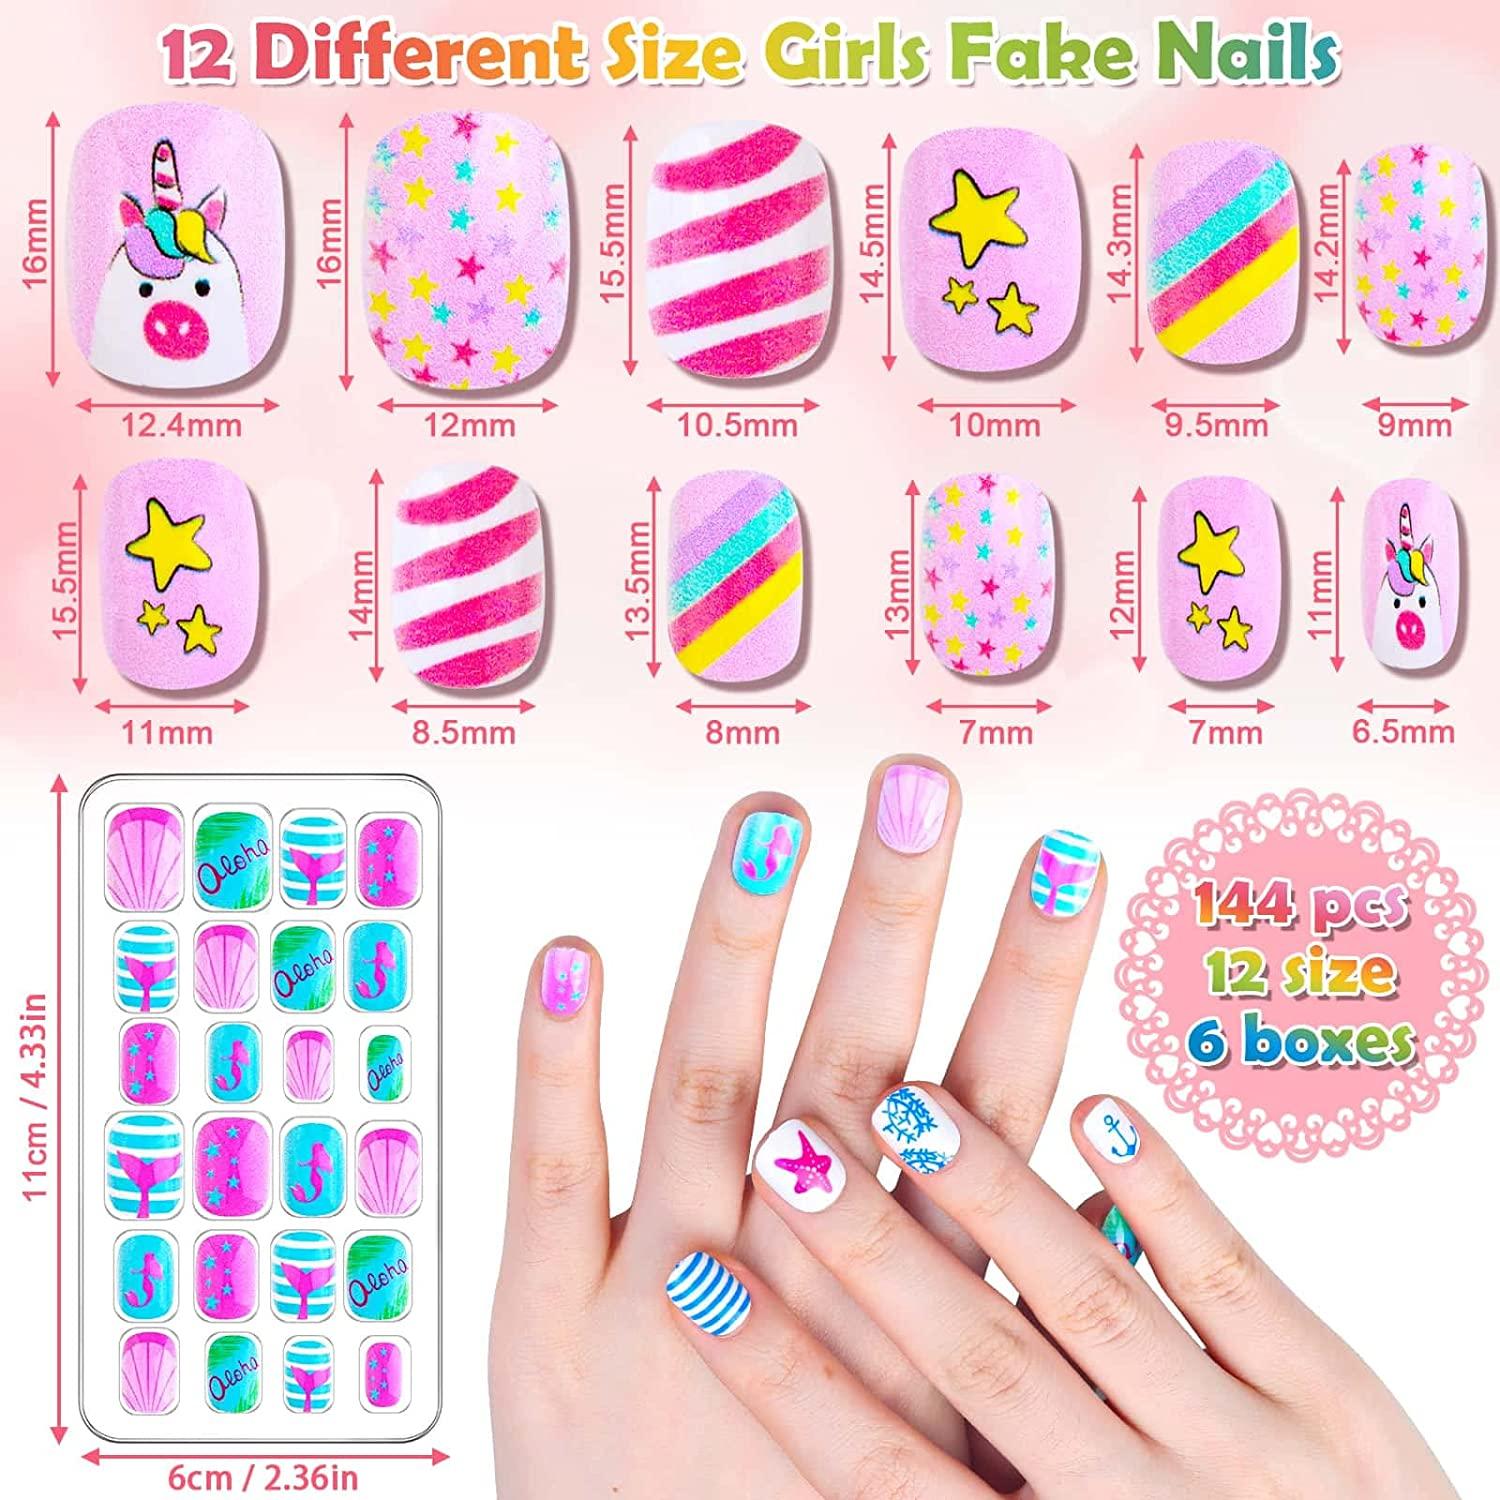 Colorful Fun Press on Nails / Smile 24 Pcs False Nail Art / Star